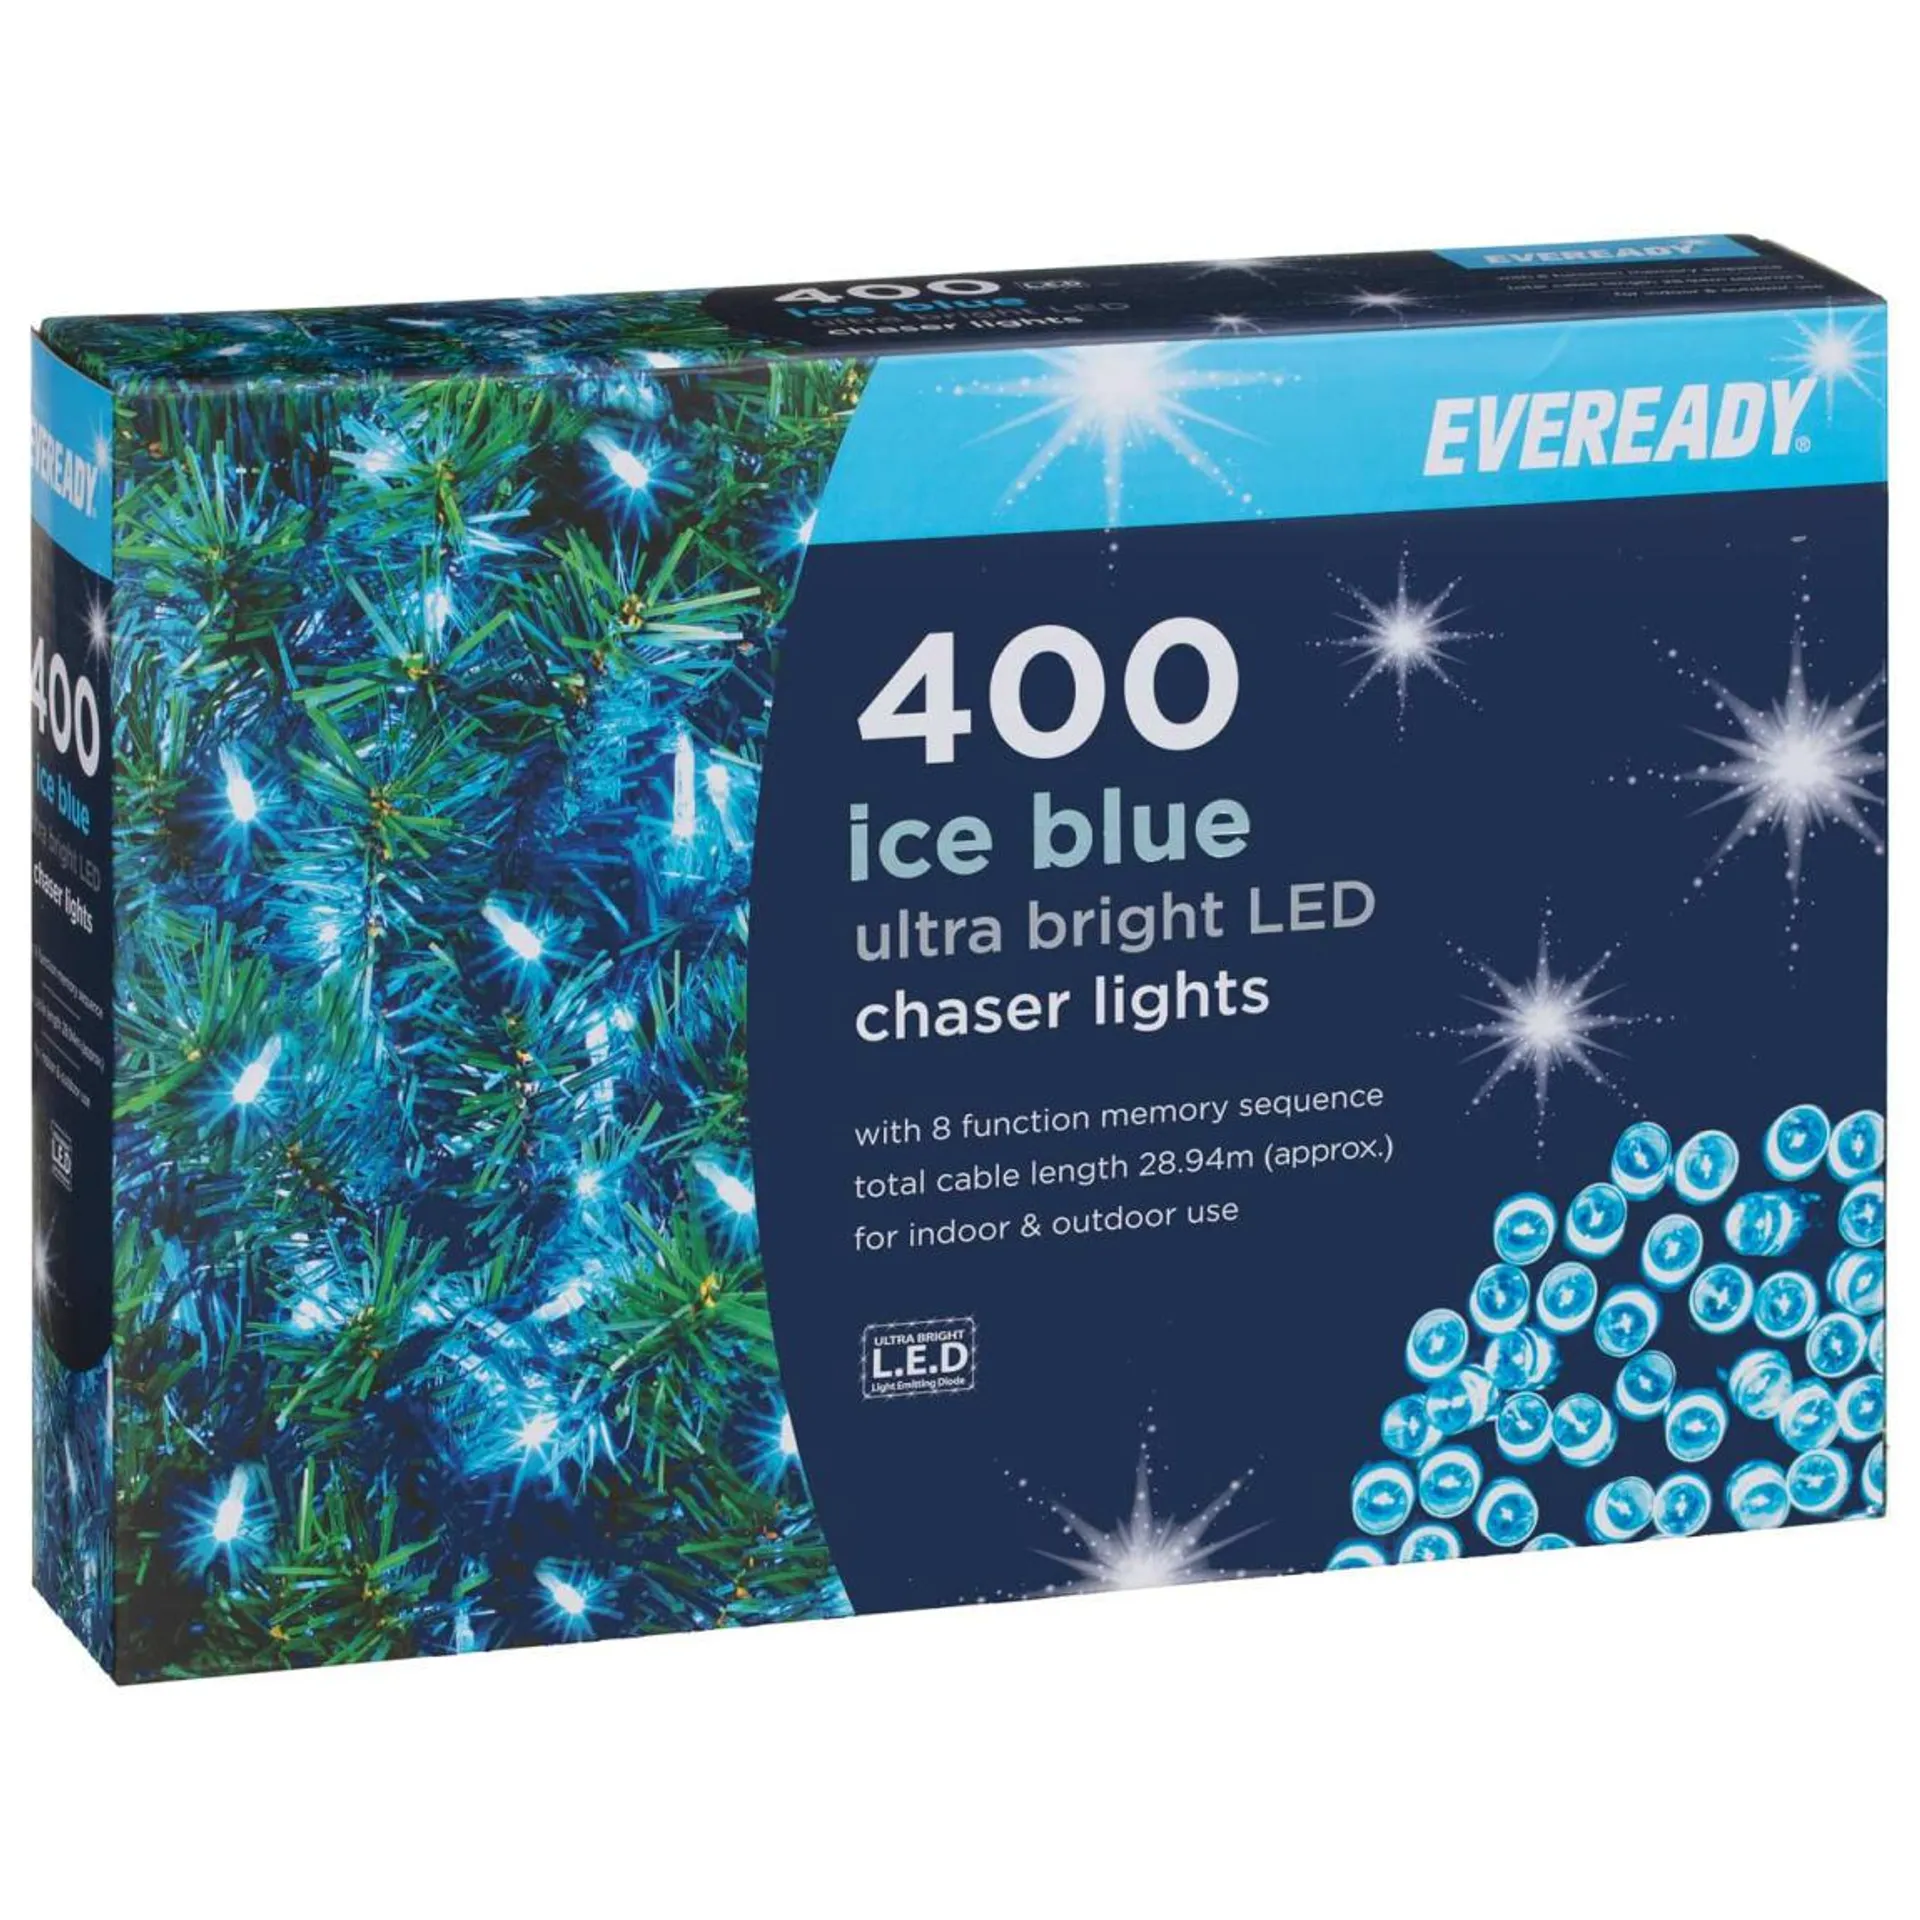 Eveready Ultra Bright LED Chaser Lights 400pk - Ice Blue